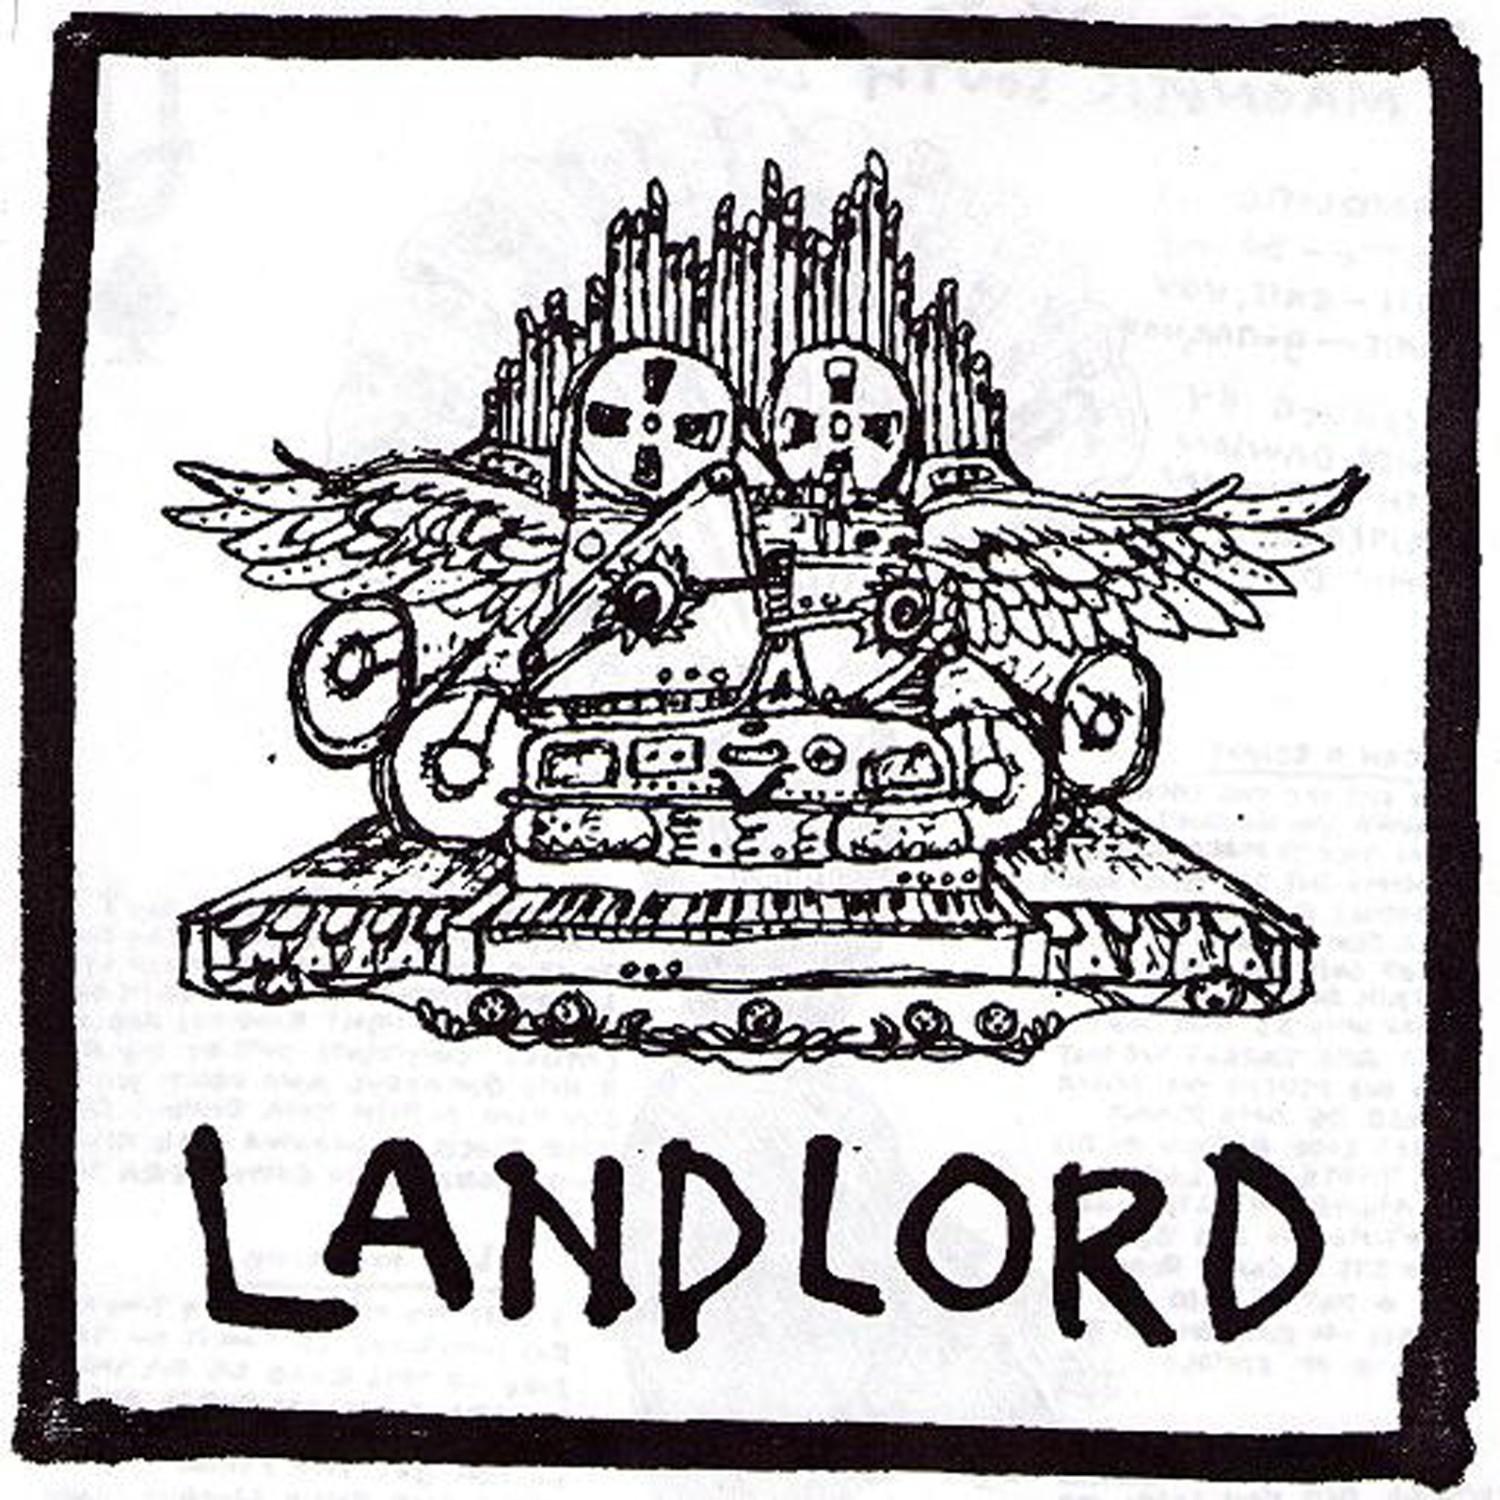 Landlord 7" EP